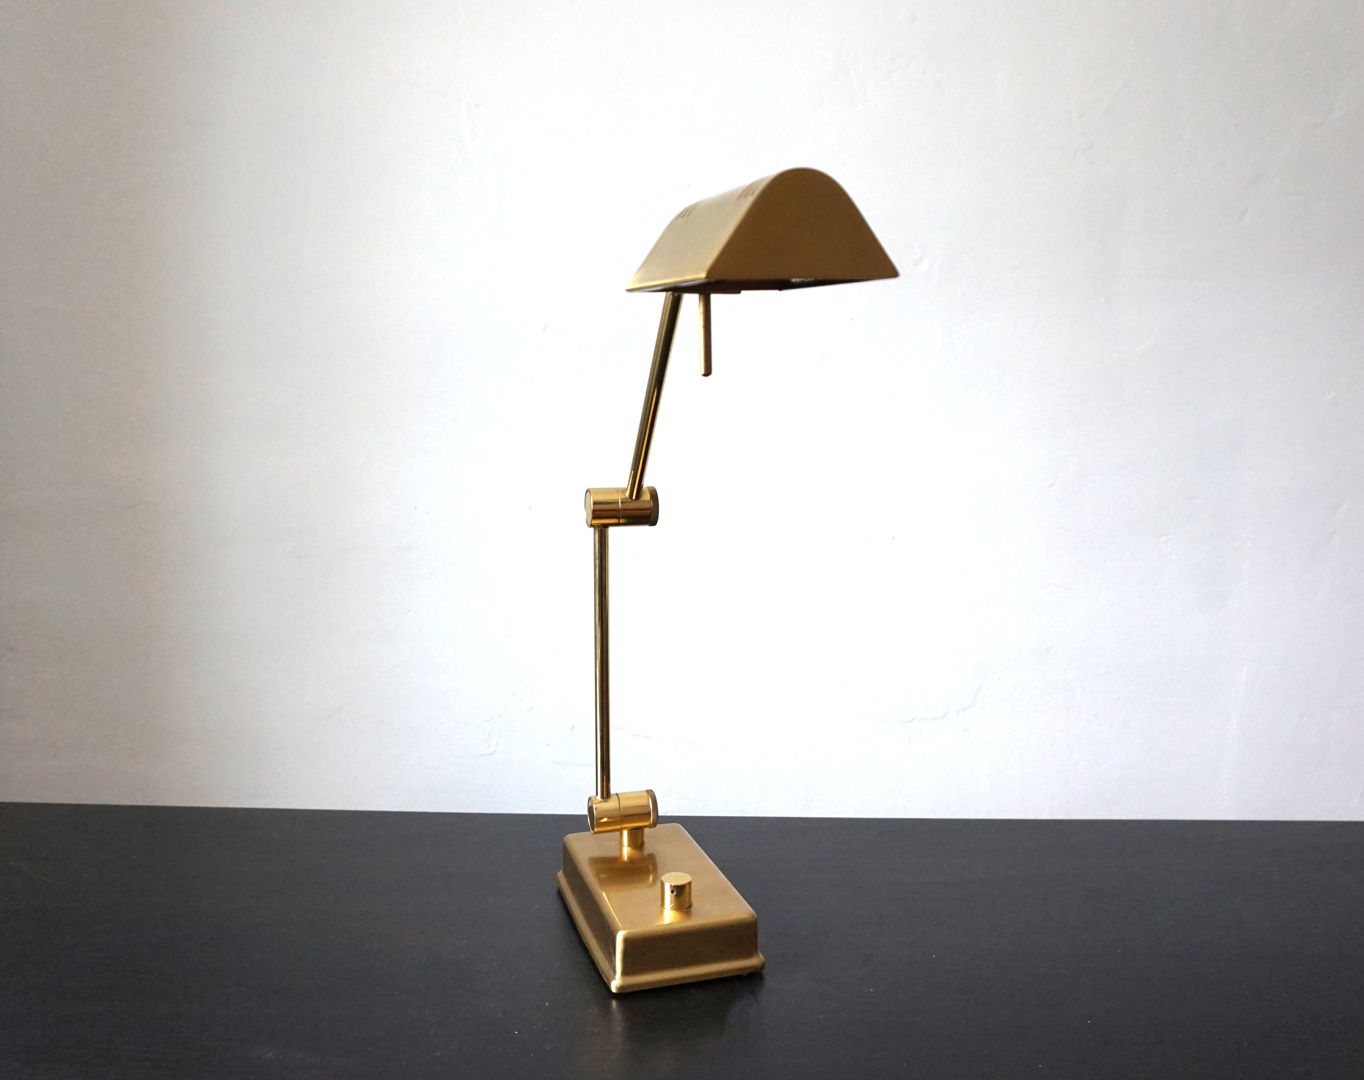 Holtkötter brass table lamp